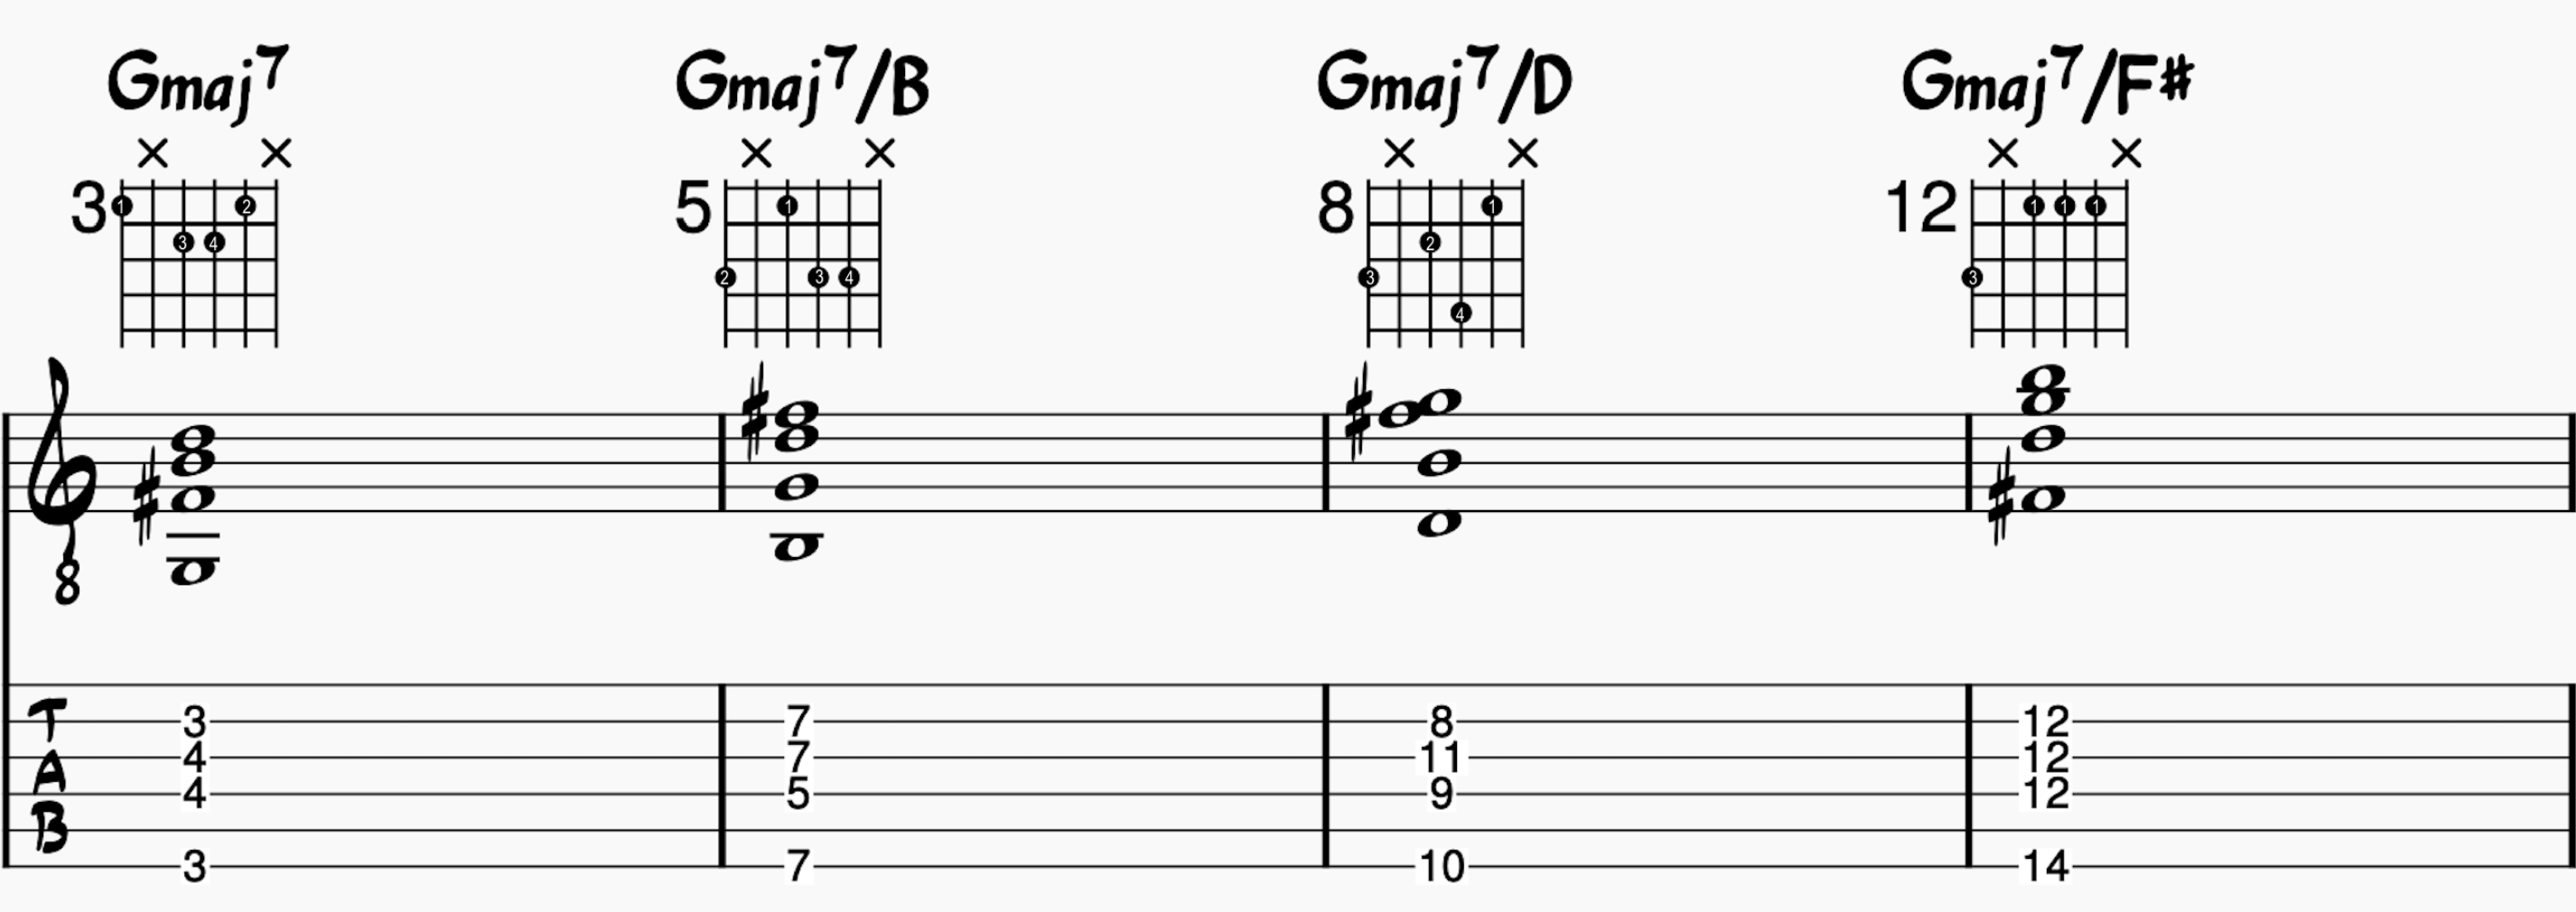 Gmaj7 Chord on Low E string, D string, G string, and B string (all inversions)